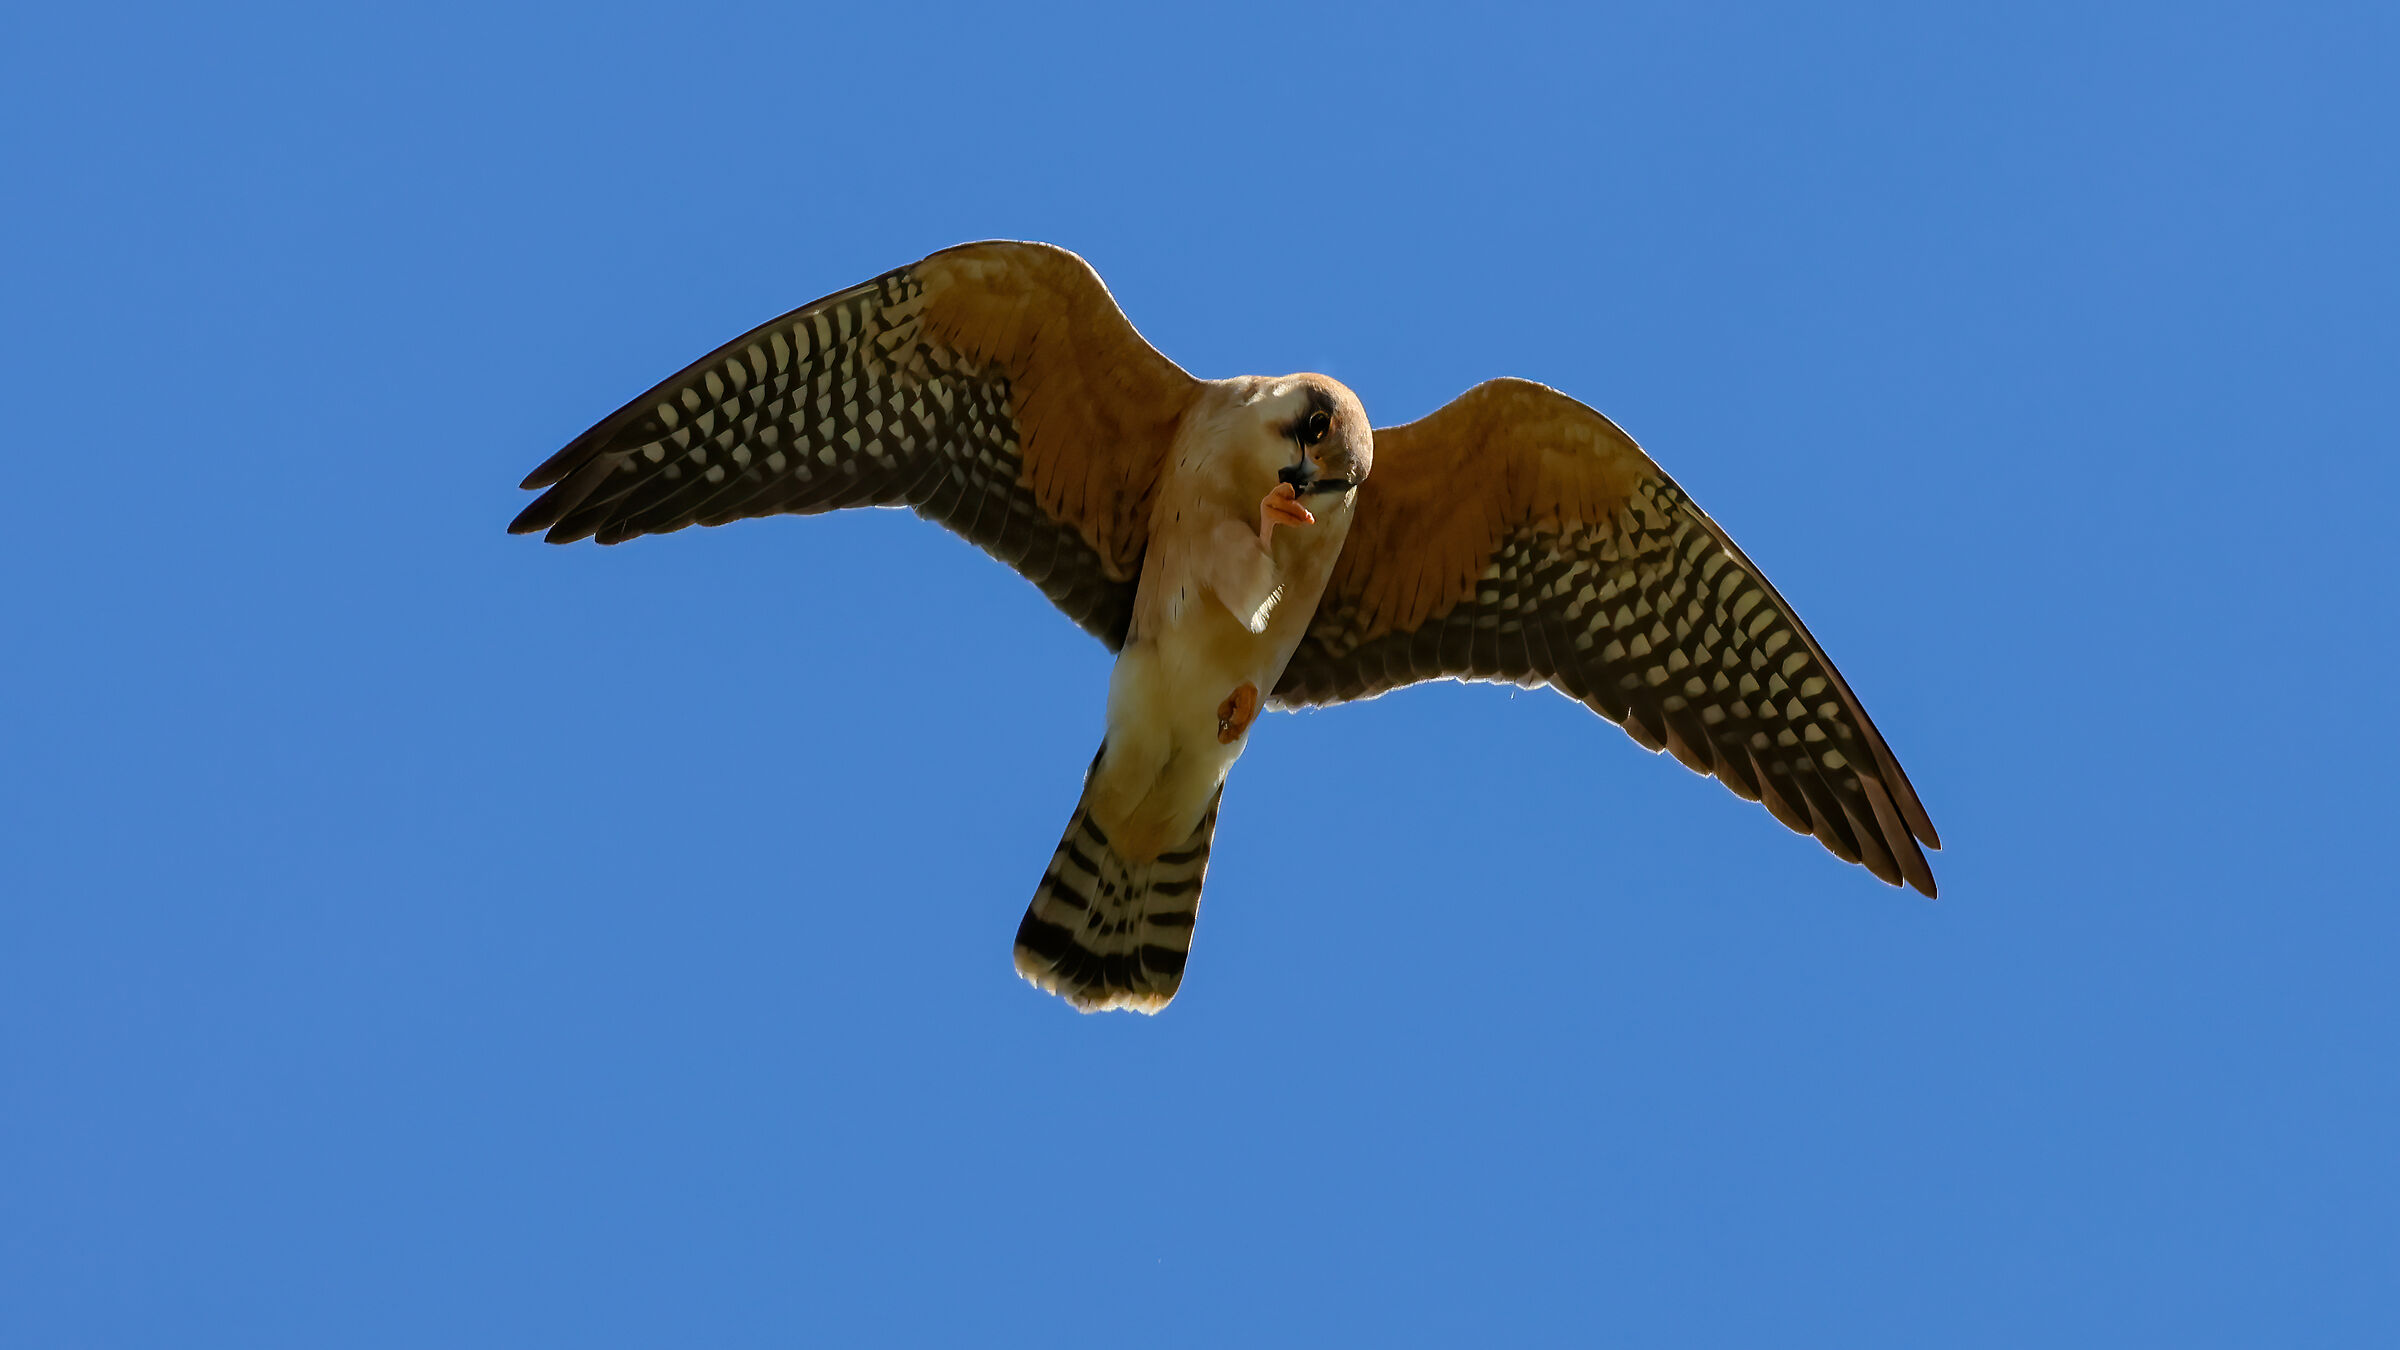 Female cuckoo hawk...